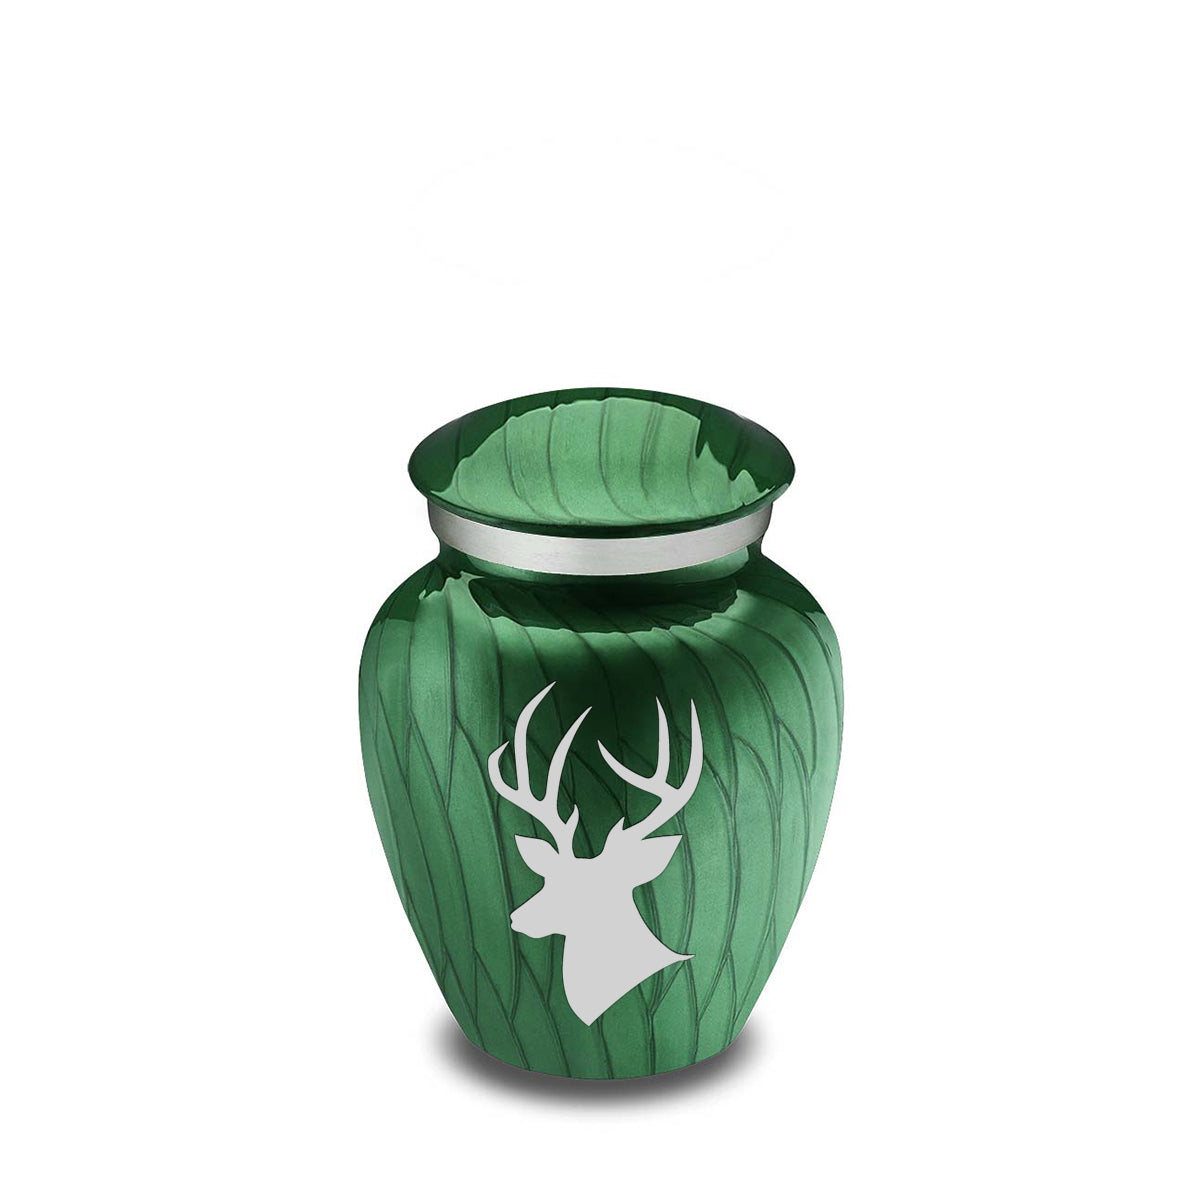 Keepsake Embrace Pearl Green Deer Cremation Urn